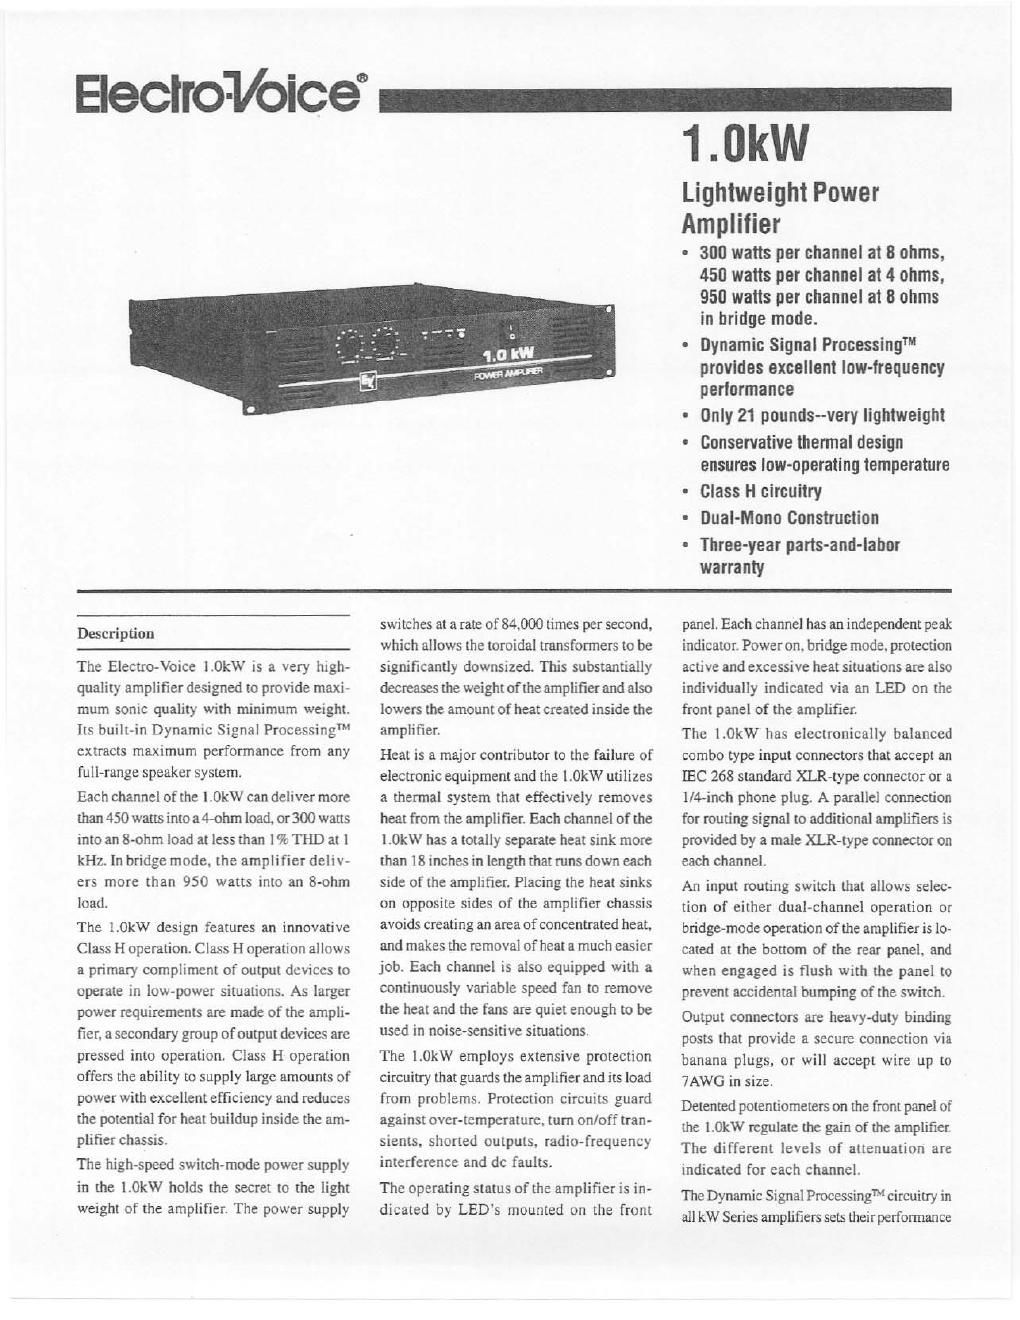 electro voice 1 0 kw brochure